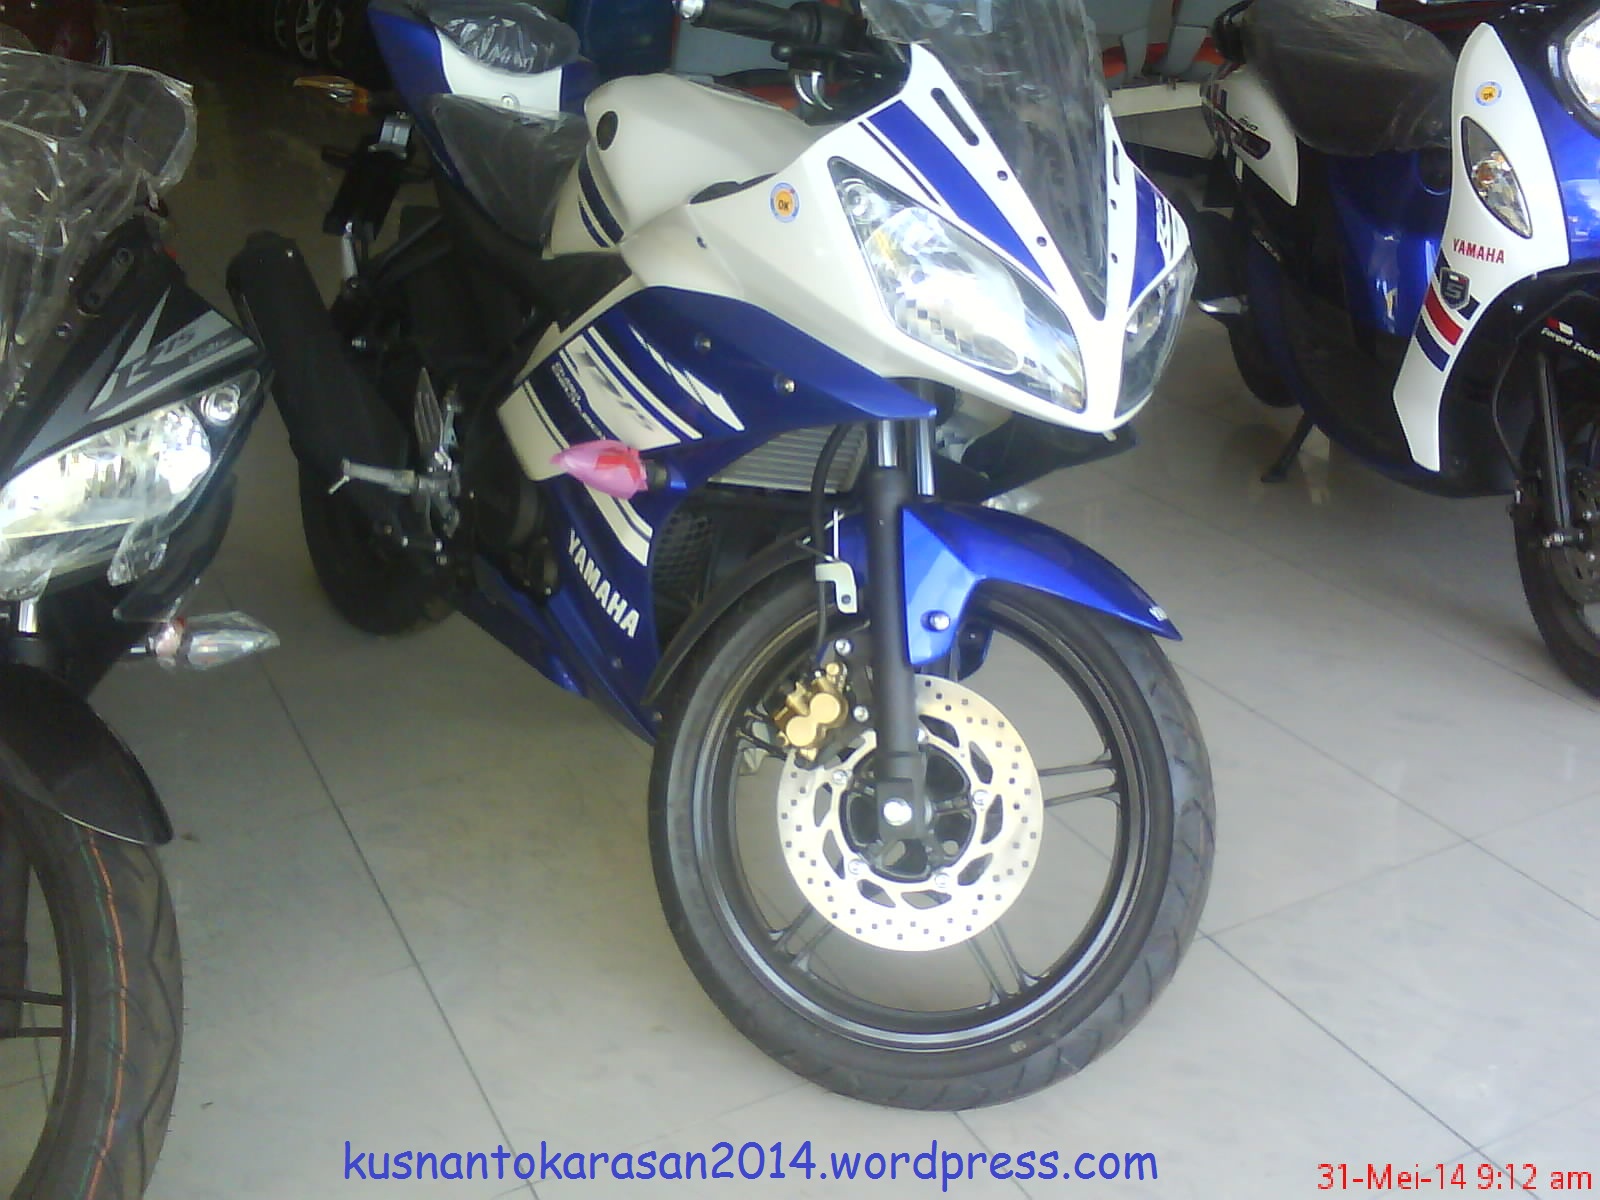 Yamaha R15 Warna Biru Putih Kusnantokarasancom